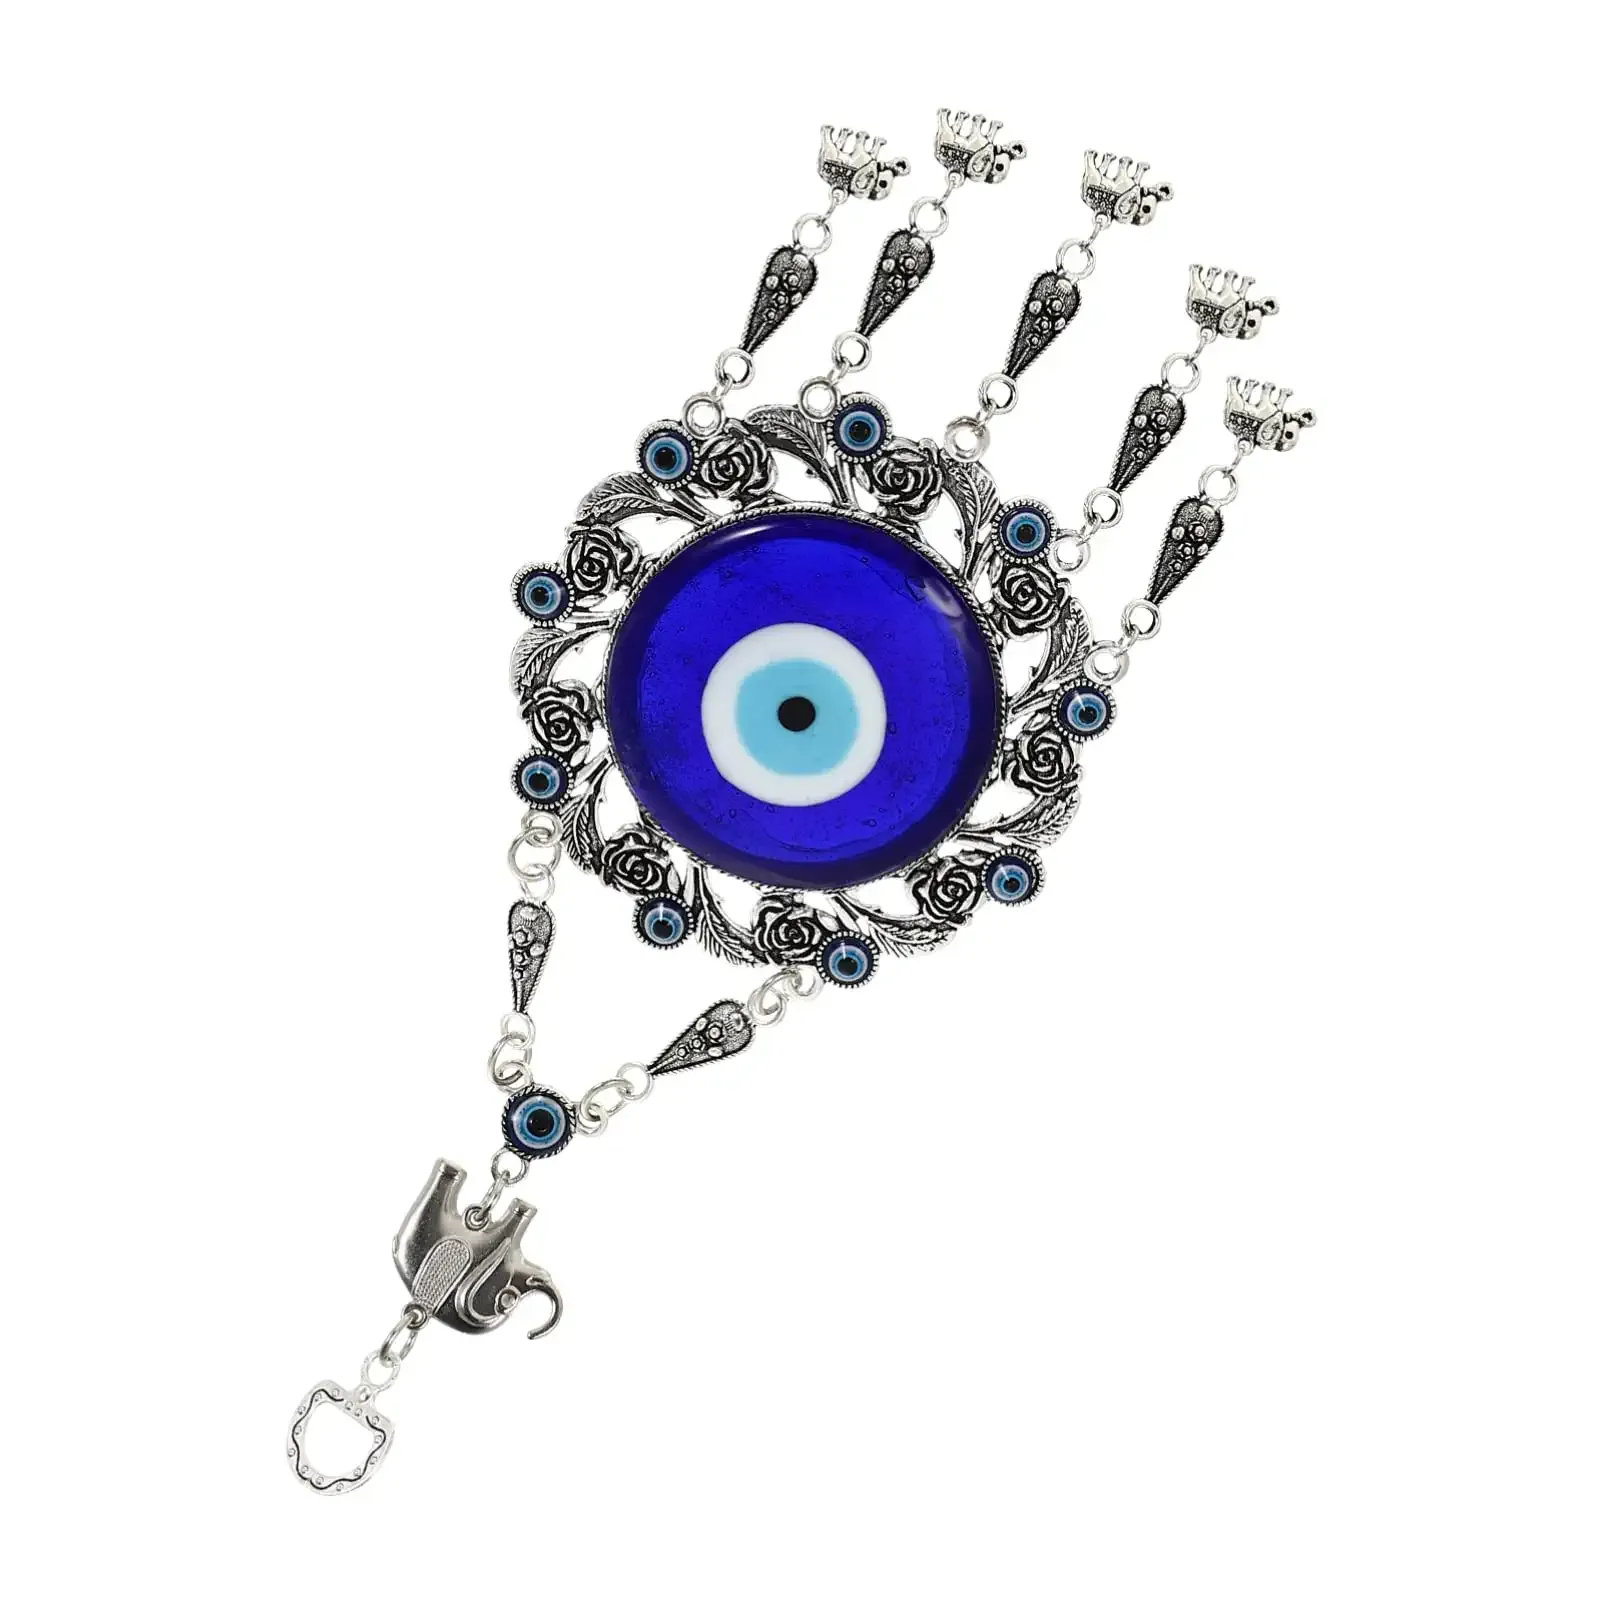 3ml evil eye keychain for women men the evileye key ring chain blueeye ward off evil keyring unique gifts souvenirs devil eyes good luck blue